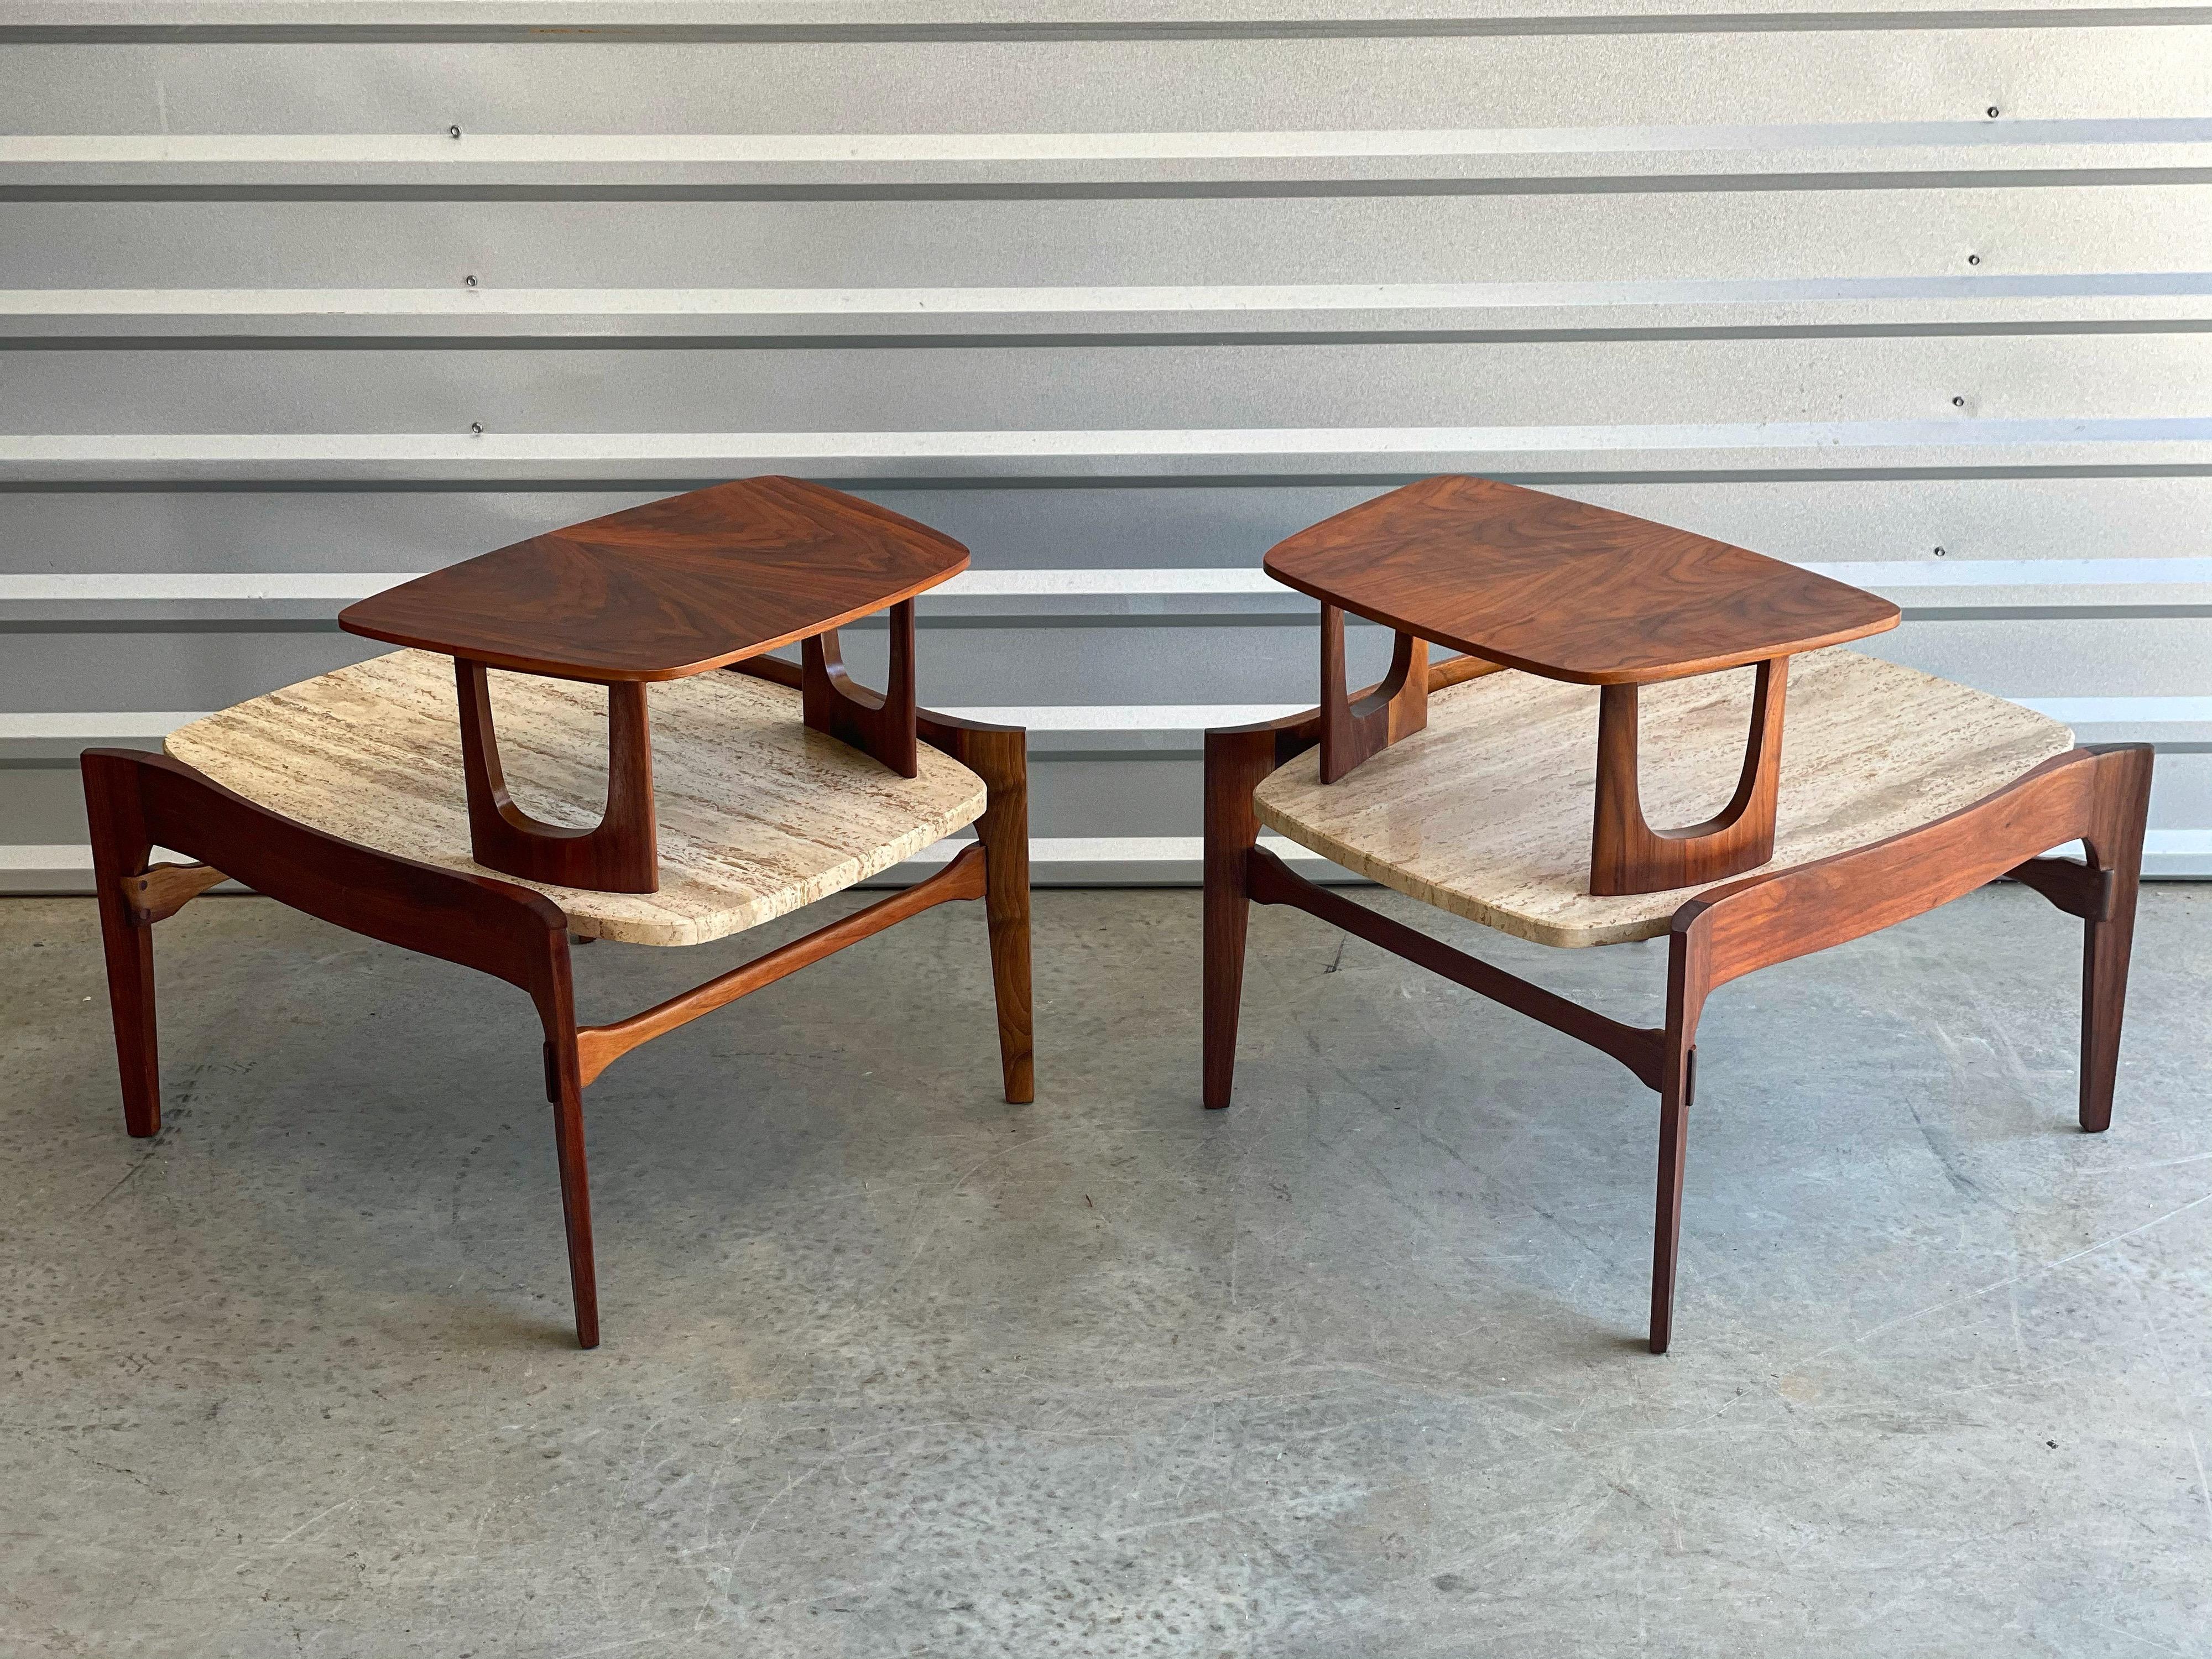 North American Midcentury Walnut and Travertine End Tables, Gordon's Fine Furniture, circa 1959